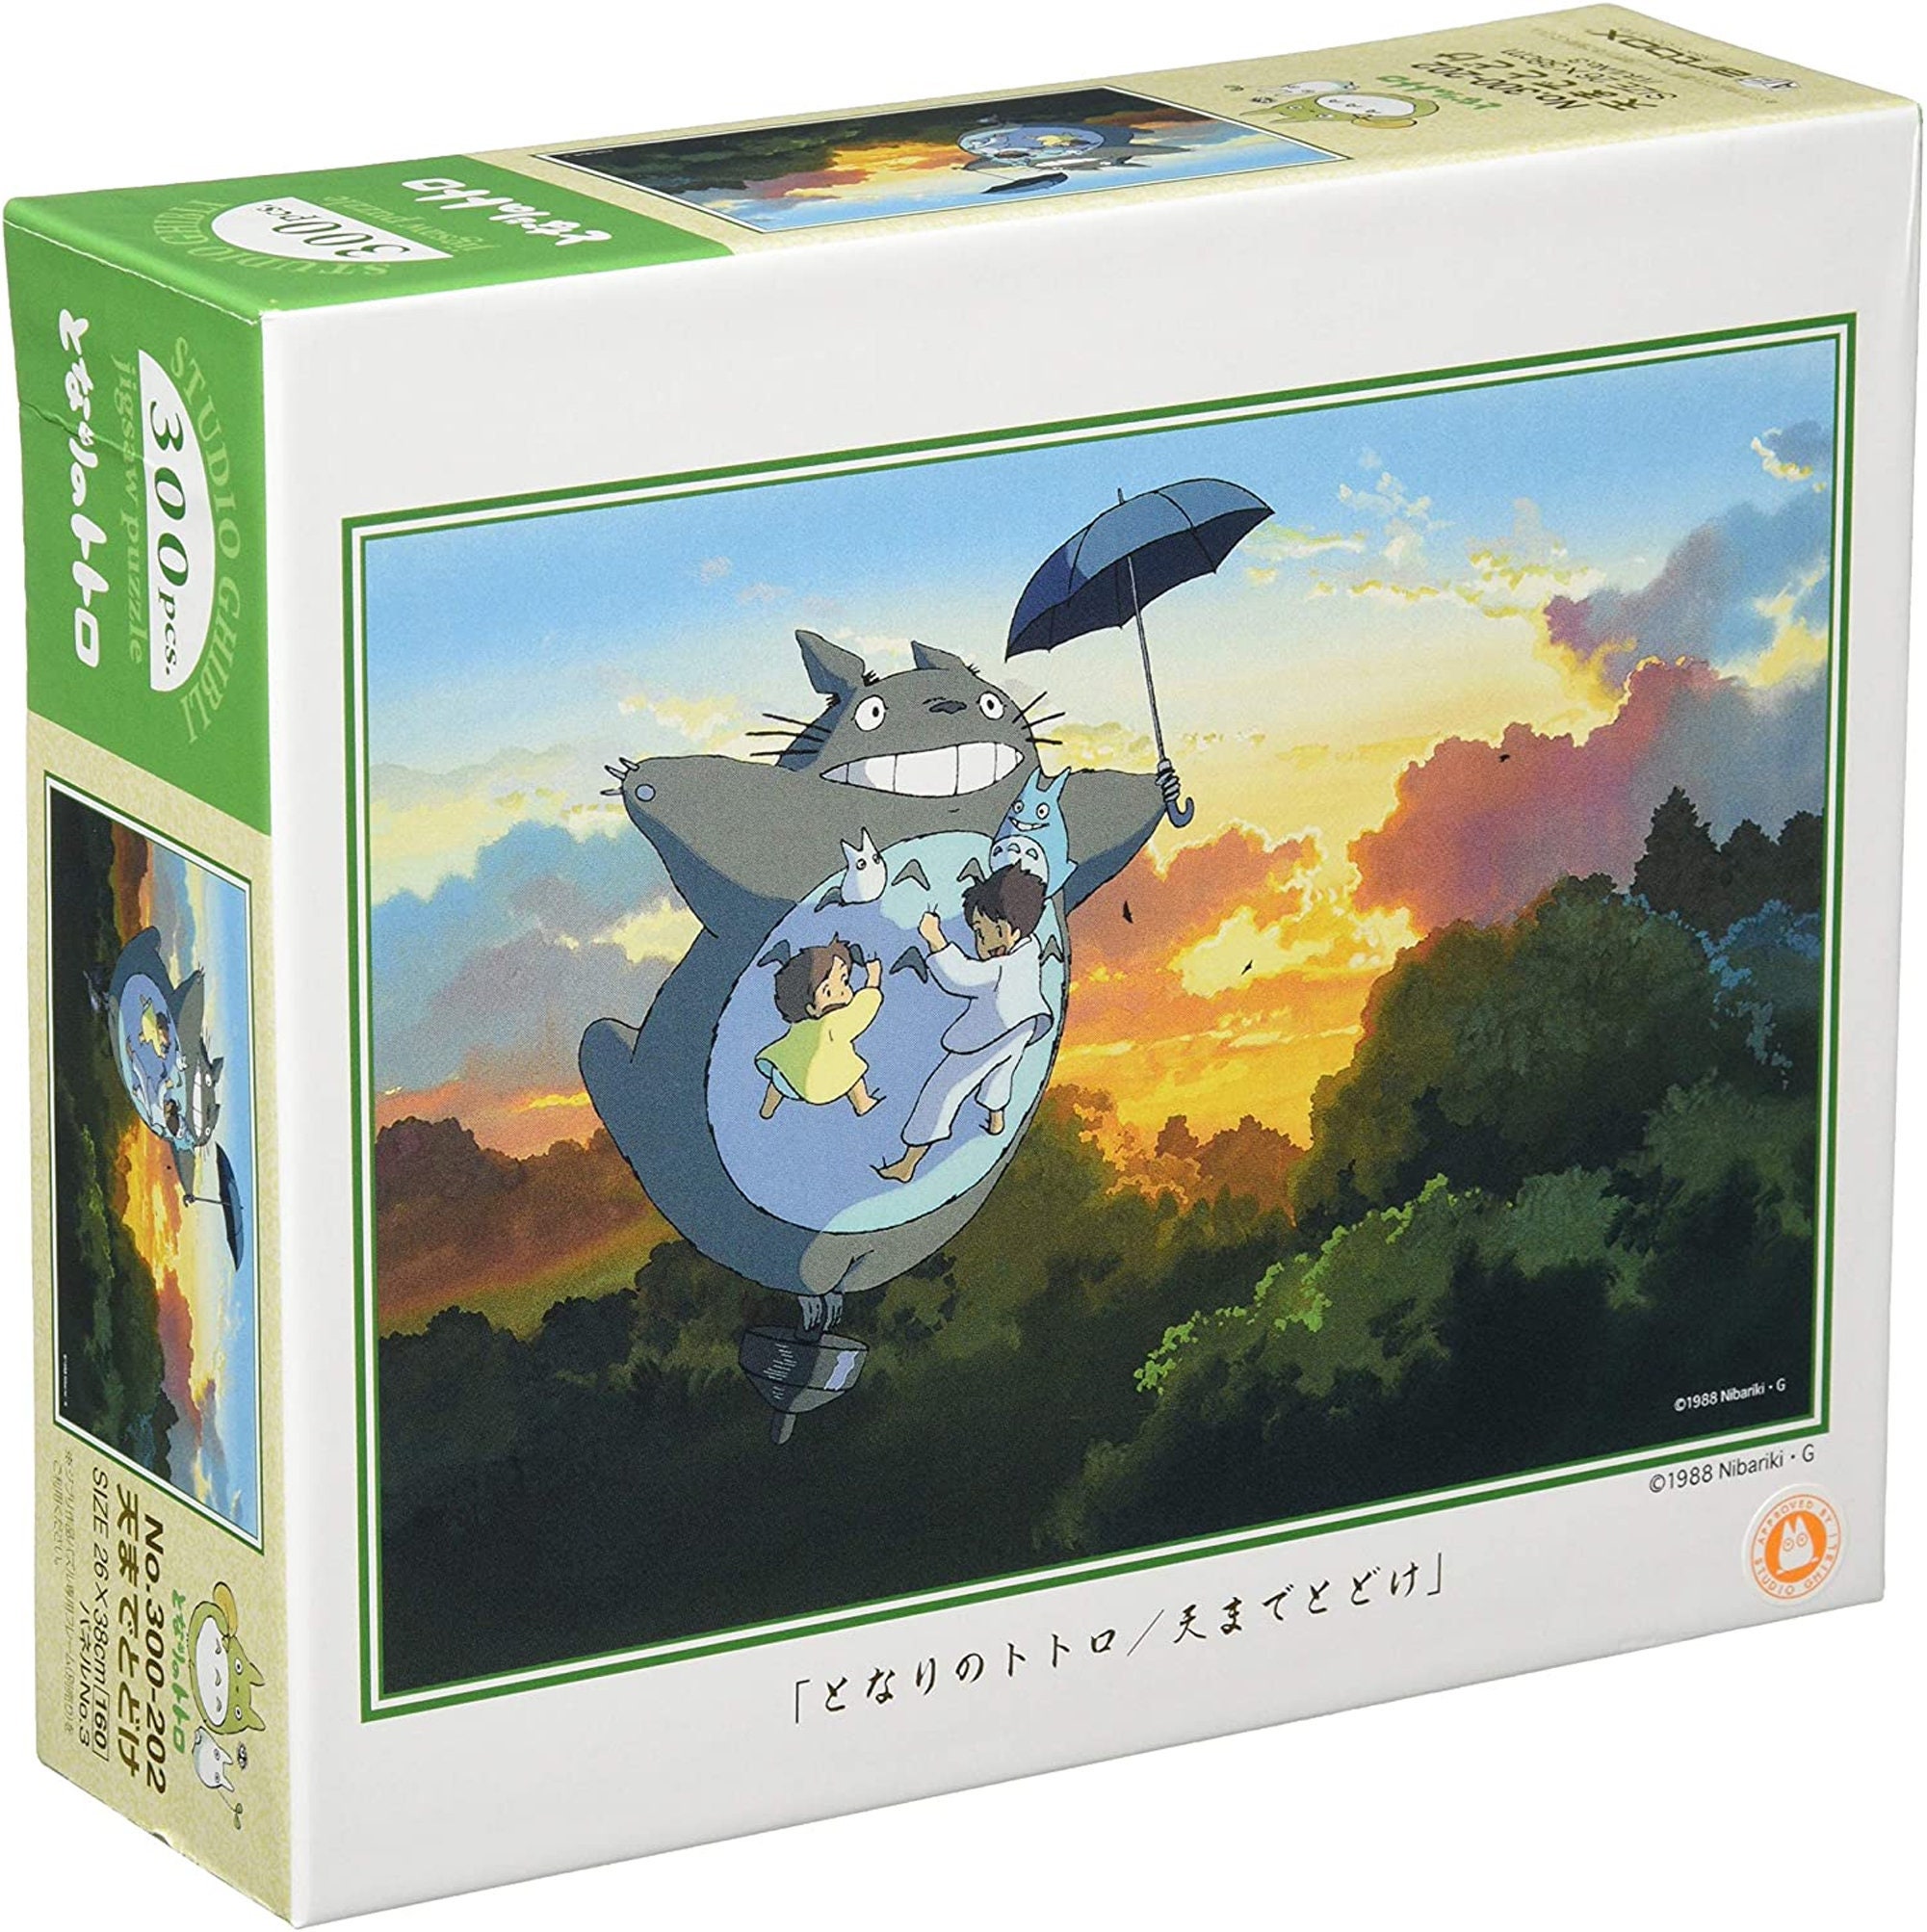 Studio Ghibli Laputa Castle in The Sky Jigsaw Puzzle 500 PC for sale online 38x53cm 